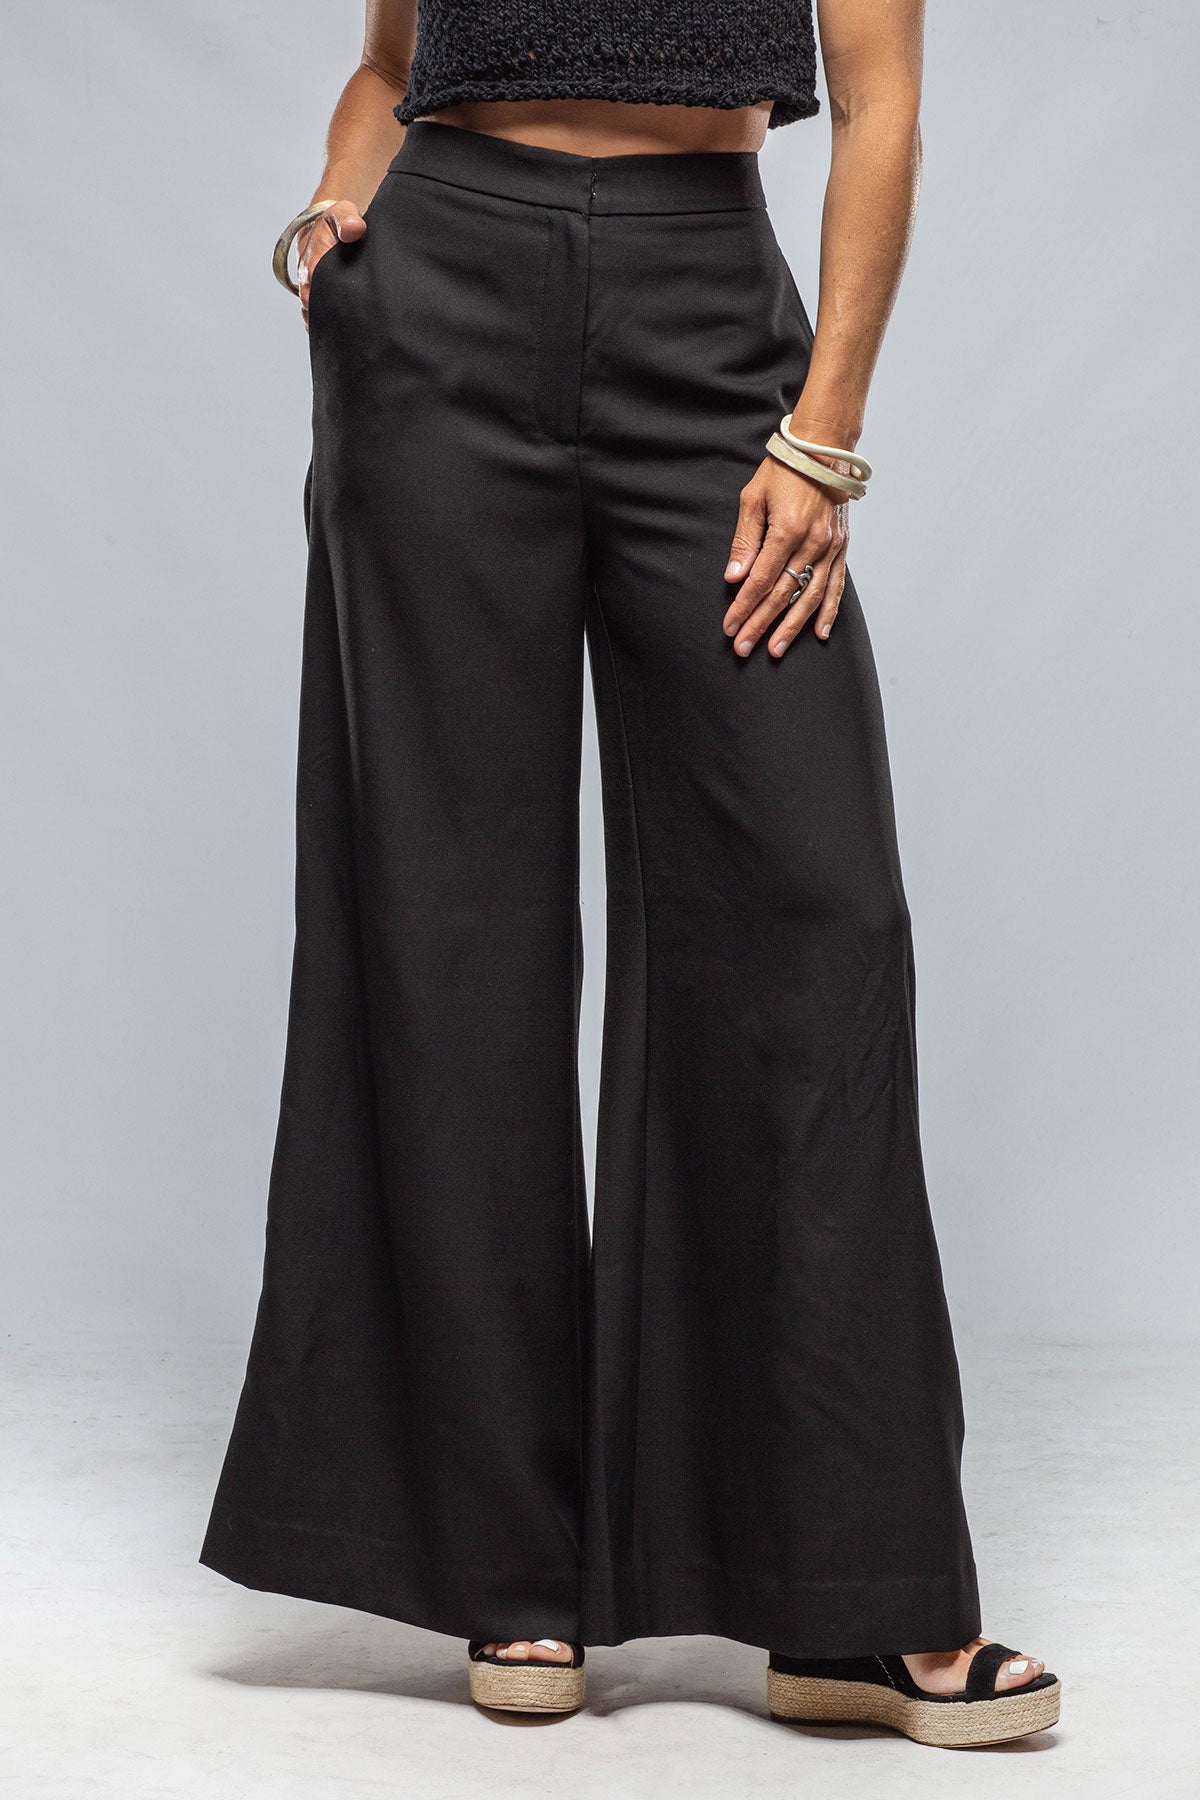 Santiago Trouser In Black | Ladies - Pants - Slacks | VOZ